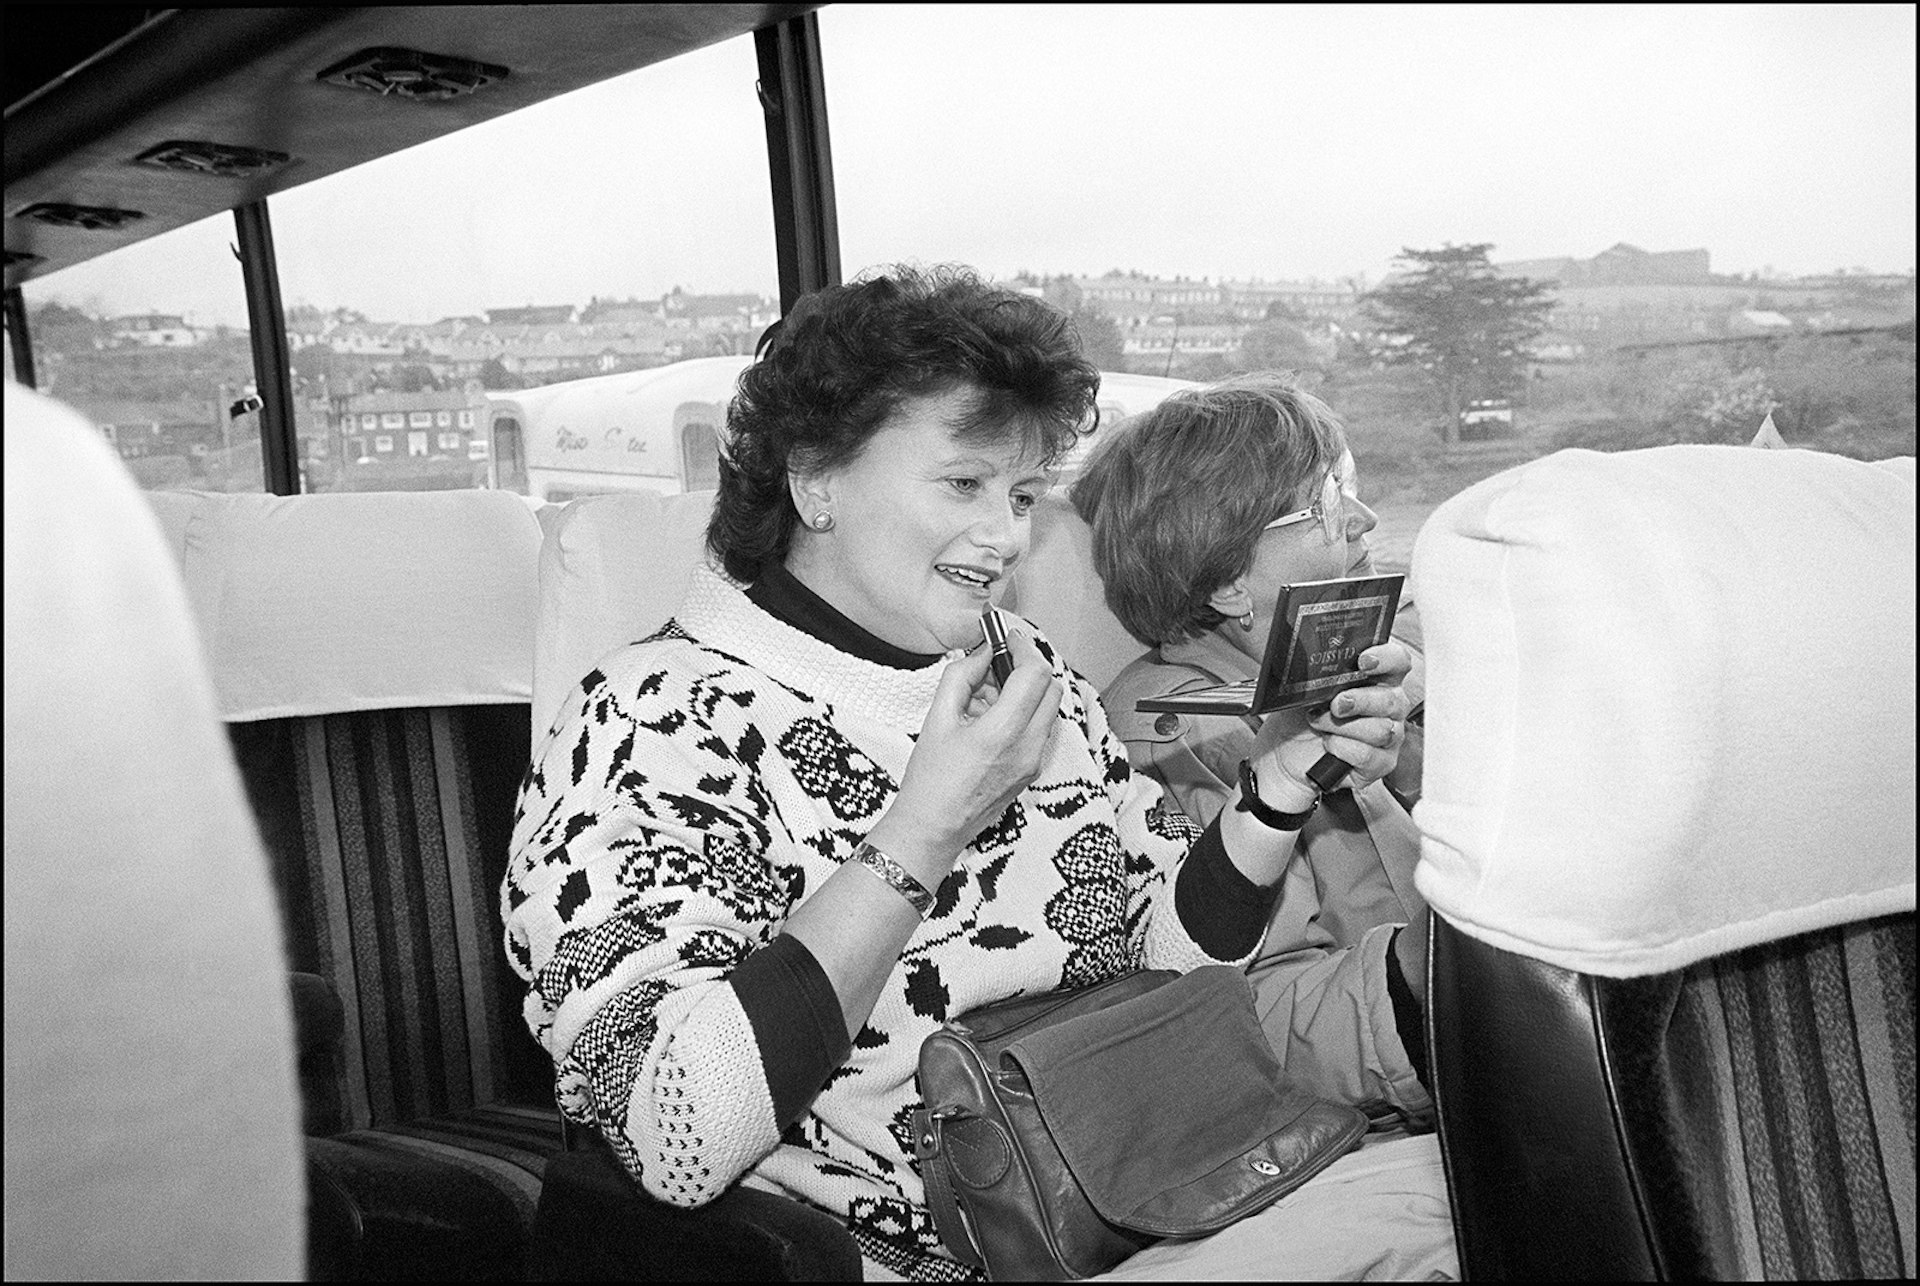 Photos of rural love in ’90s Ireland